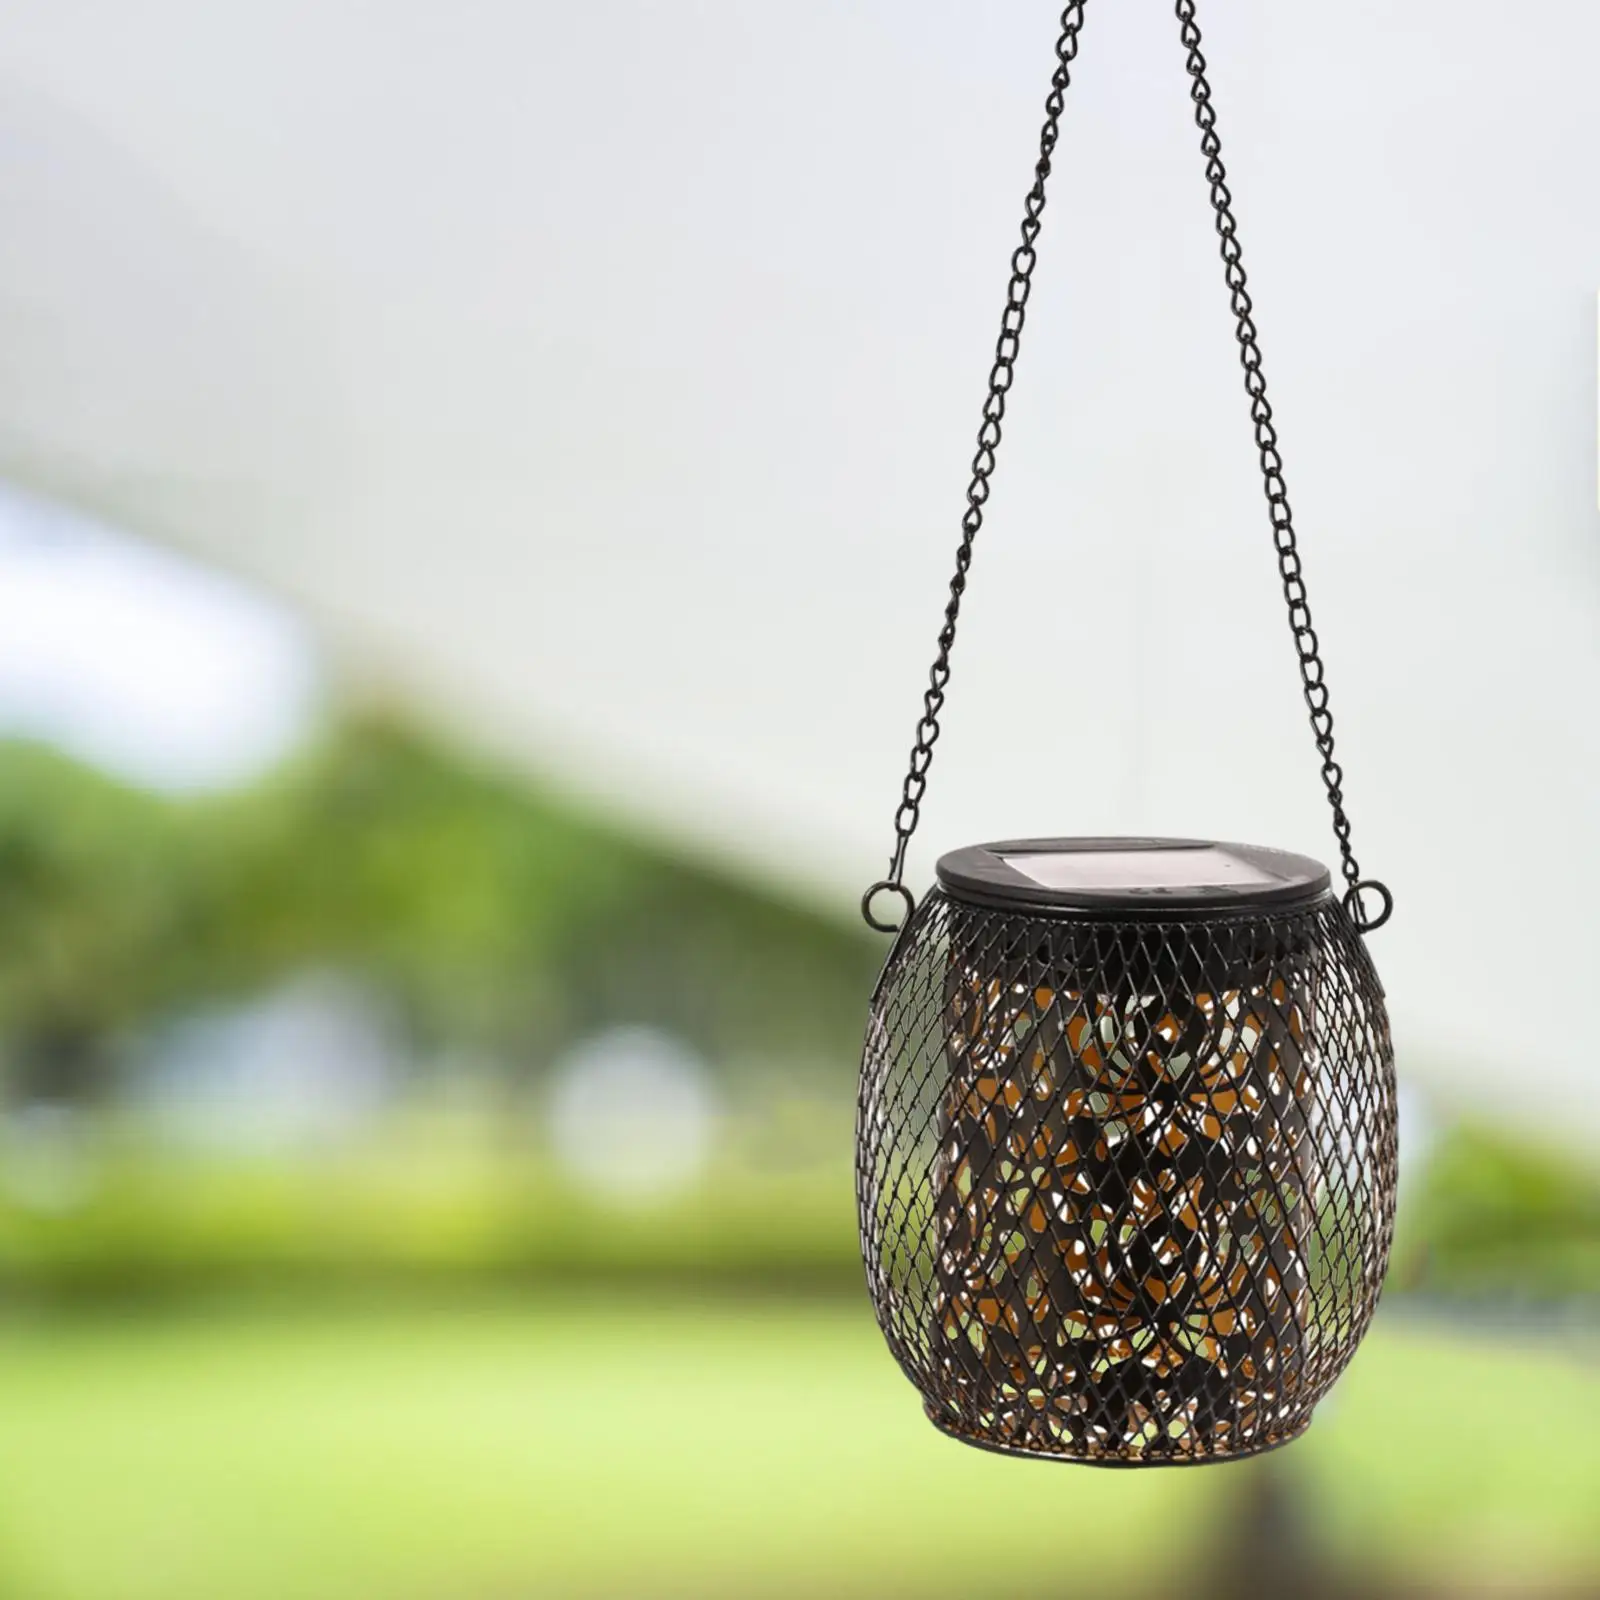 Metal Garden Solar Hanging Lantern Light IP65 Waterproof for Lawn Tree Decor